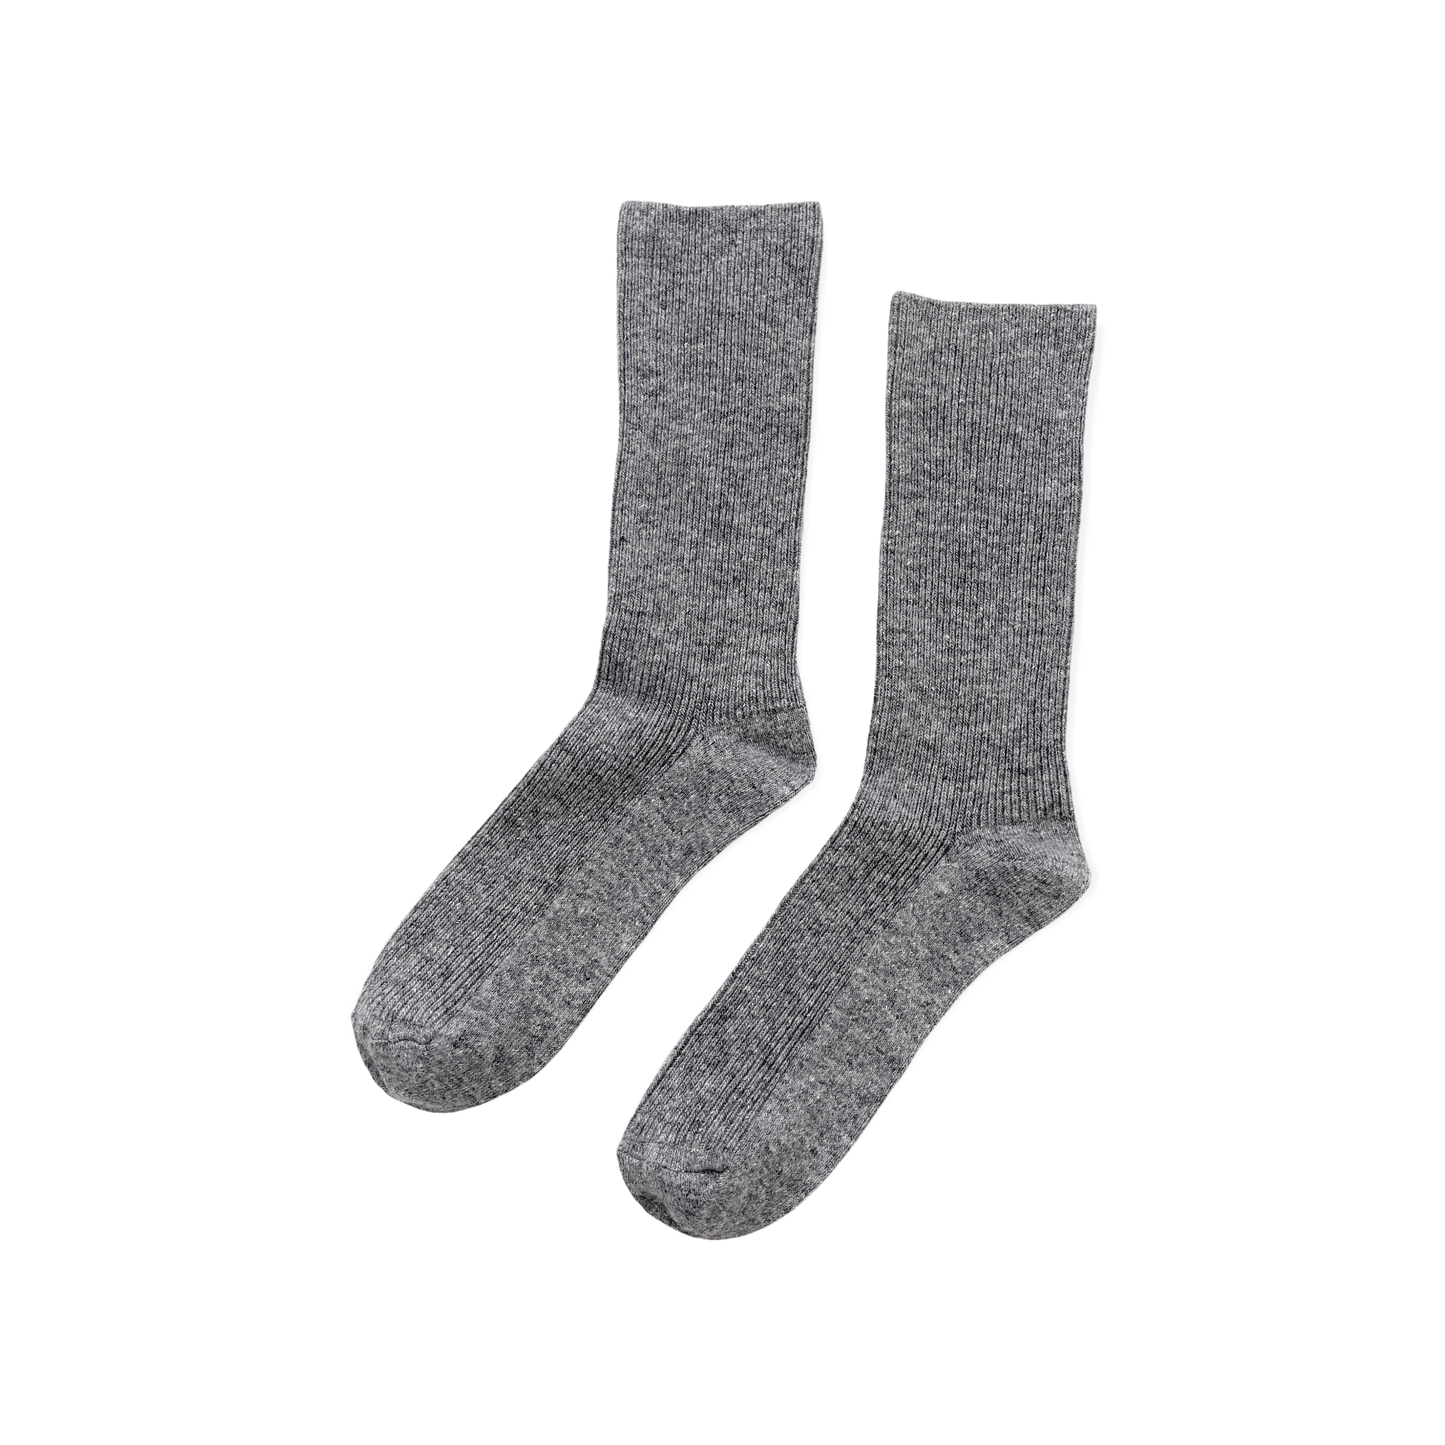 Le Bon Shoppe | Cashmere Grandpa Socks